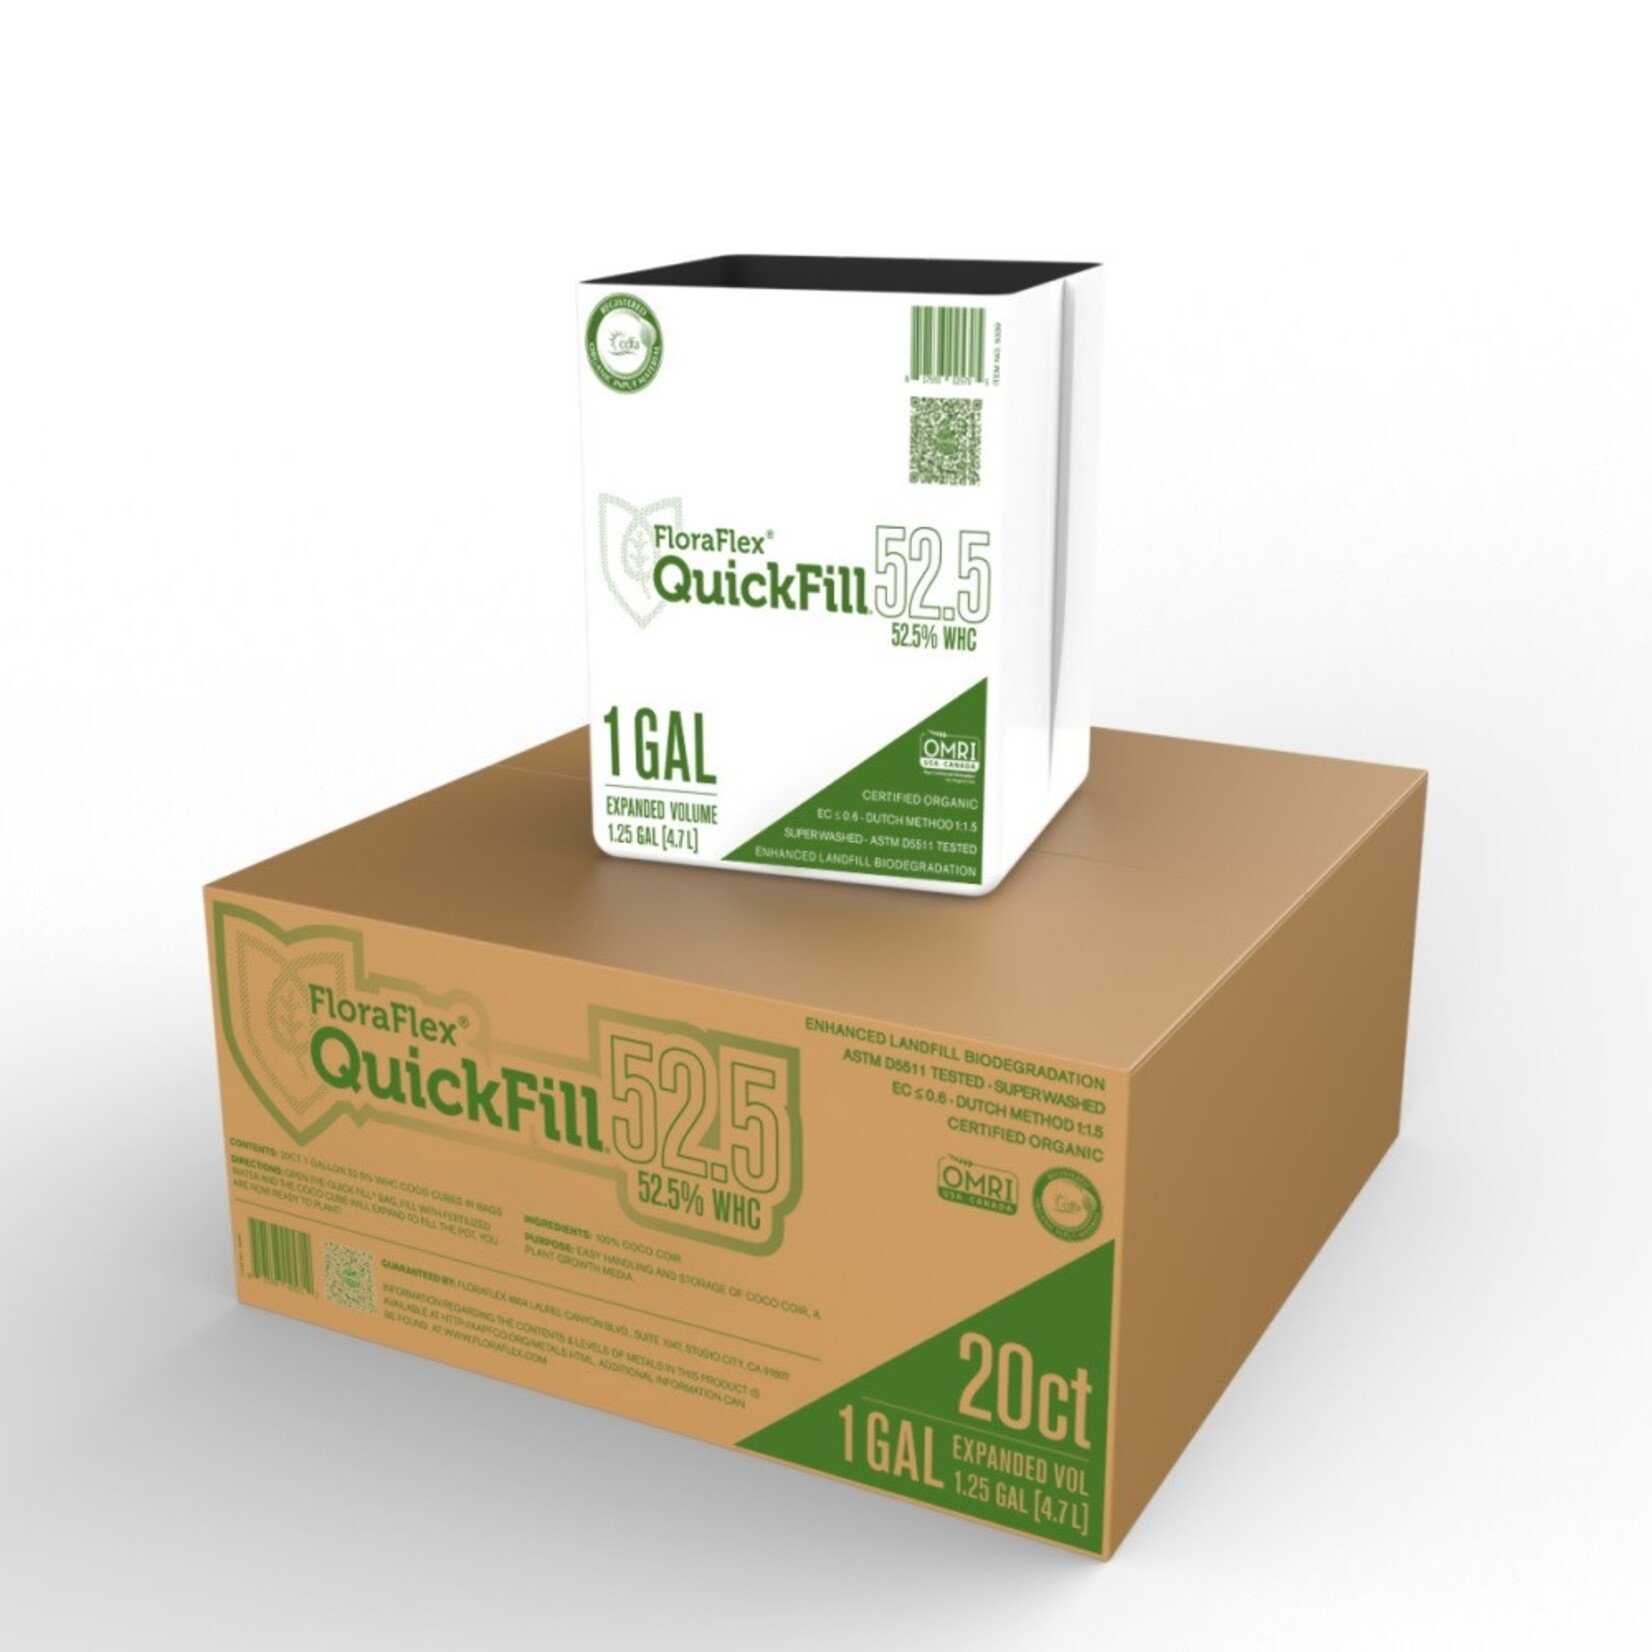 Flora Flex 1 Gal Quickfill™ | 52.5% WHC | Expandable Organic Coco Coir Plant Medium (1 Bag)